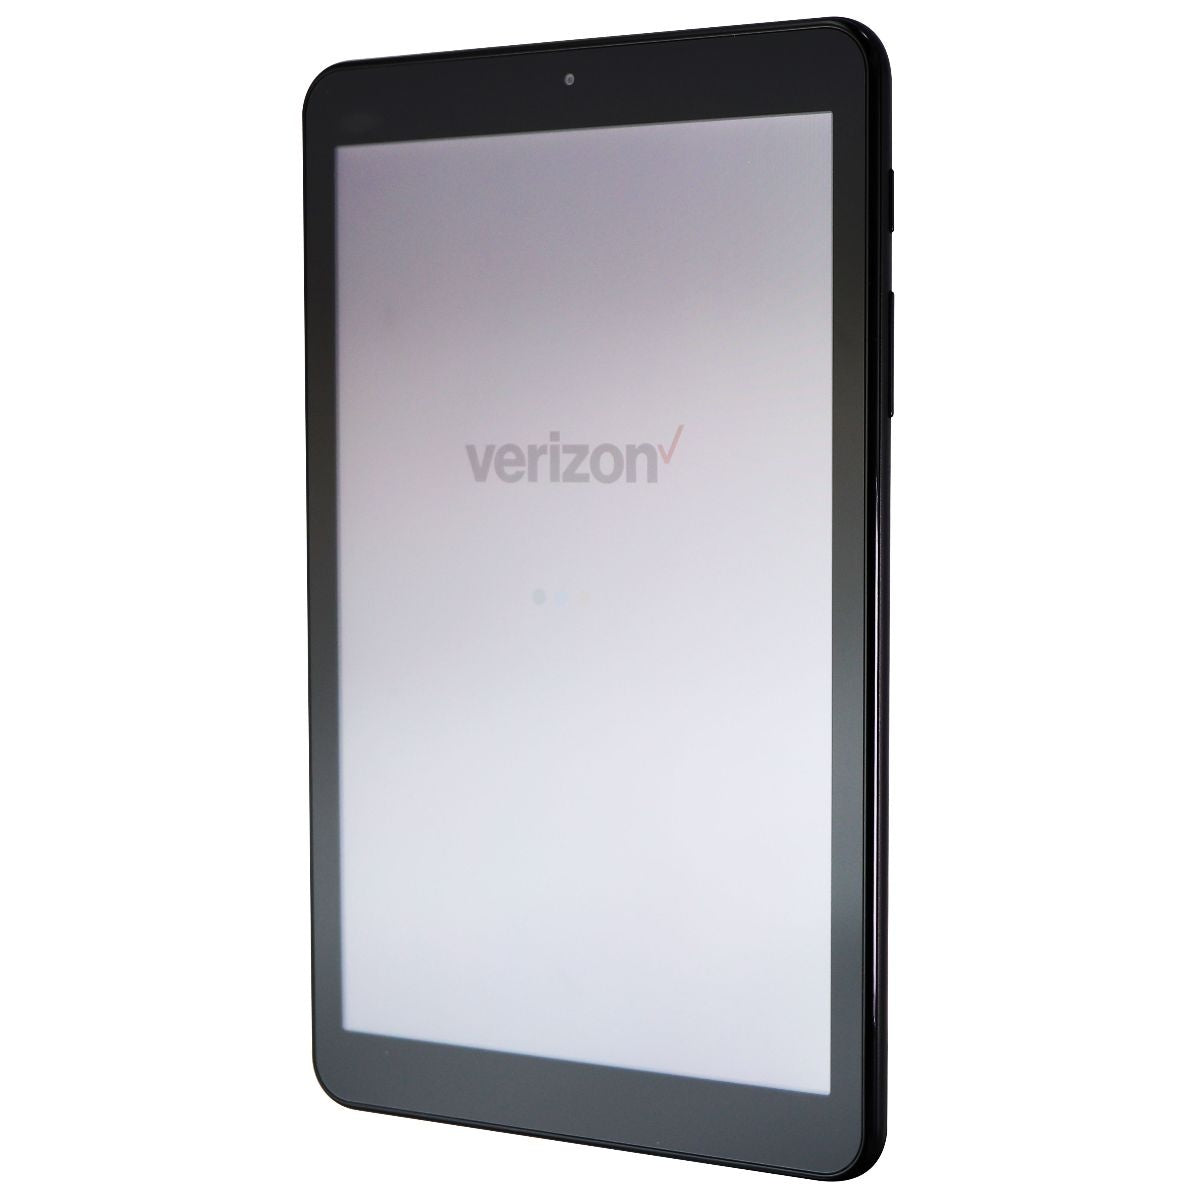 Samsung Galaxy Tab A (8.0) Tablet (SM-T387V) GSM + Verizon - 32GB / Black iPads, Tablets & eBook Readers Samsung    - Simple Cell Bulk Wholesale Pricing - USA Seller